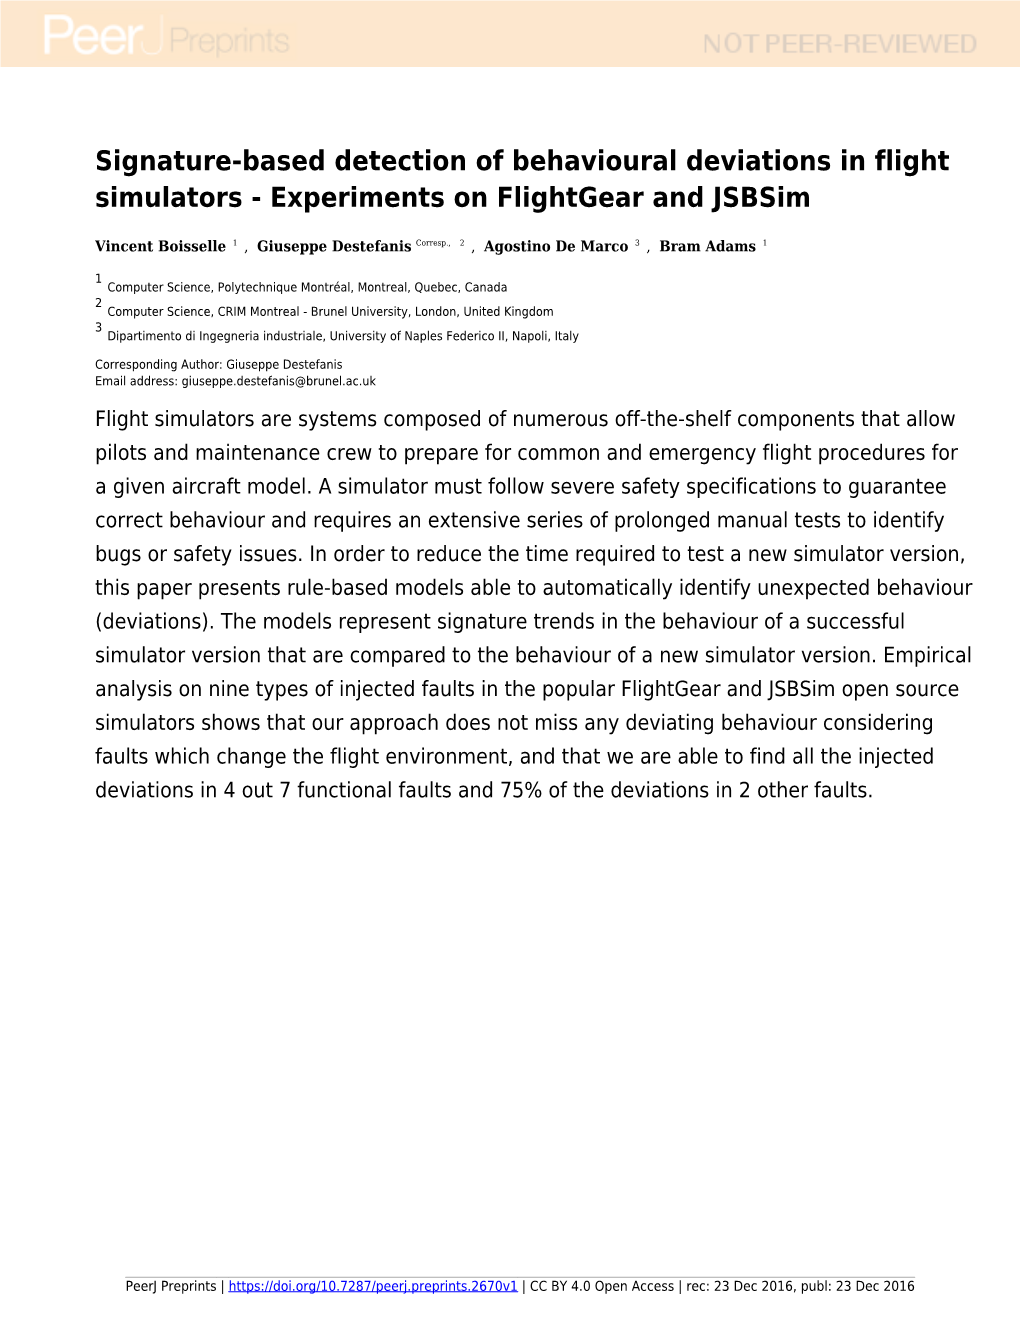 Experiments on Flightgear and Jsbsim